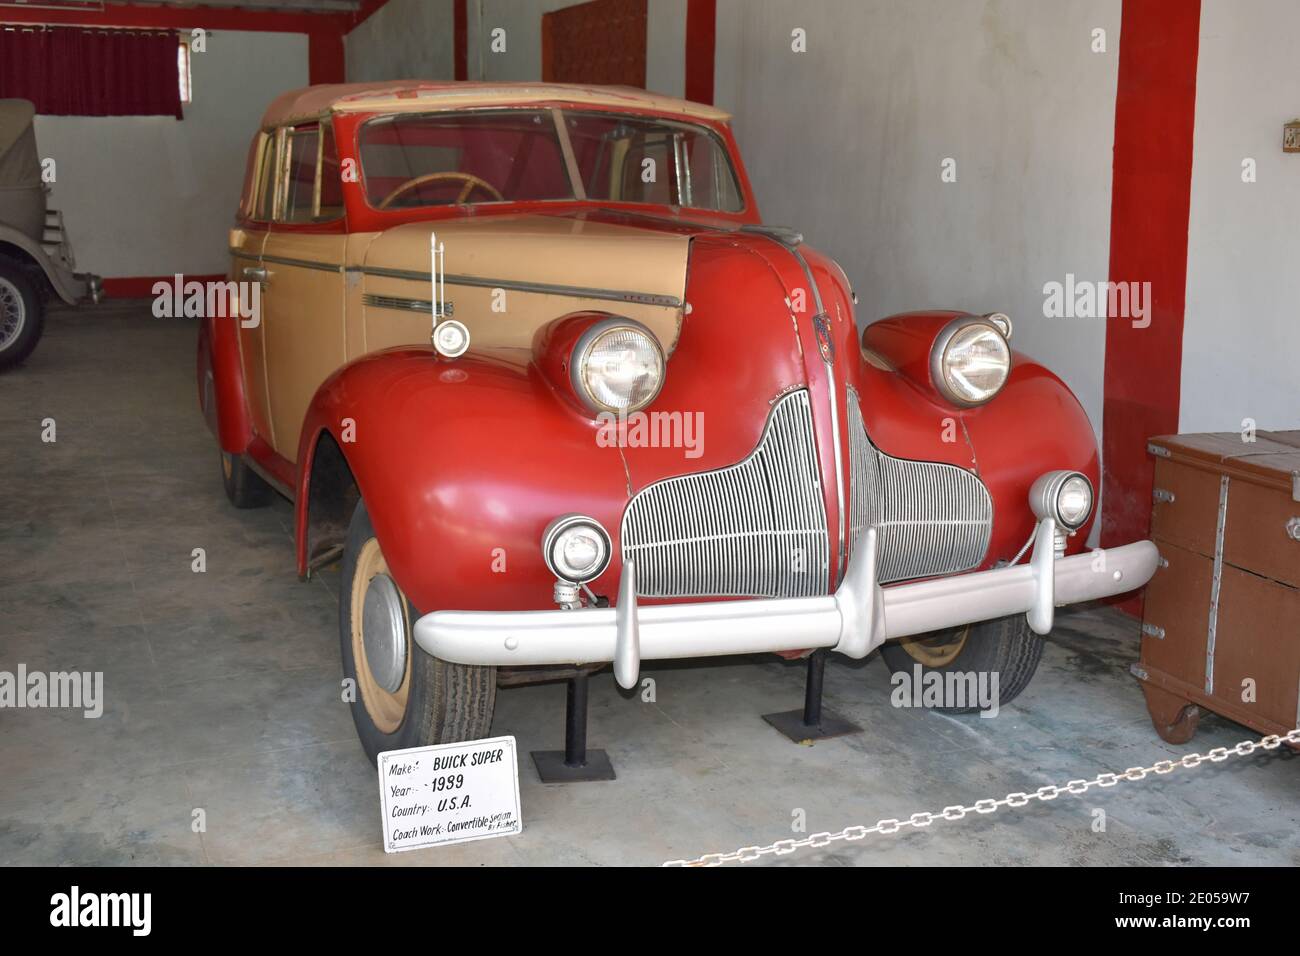 16 Nov 2020, Auto World Vintage Car Museum. Ahmedabad, Gujarat, India. BUICK SUPER, YEAR 1939, U.S.A, Convertible Sedan Stock Photo